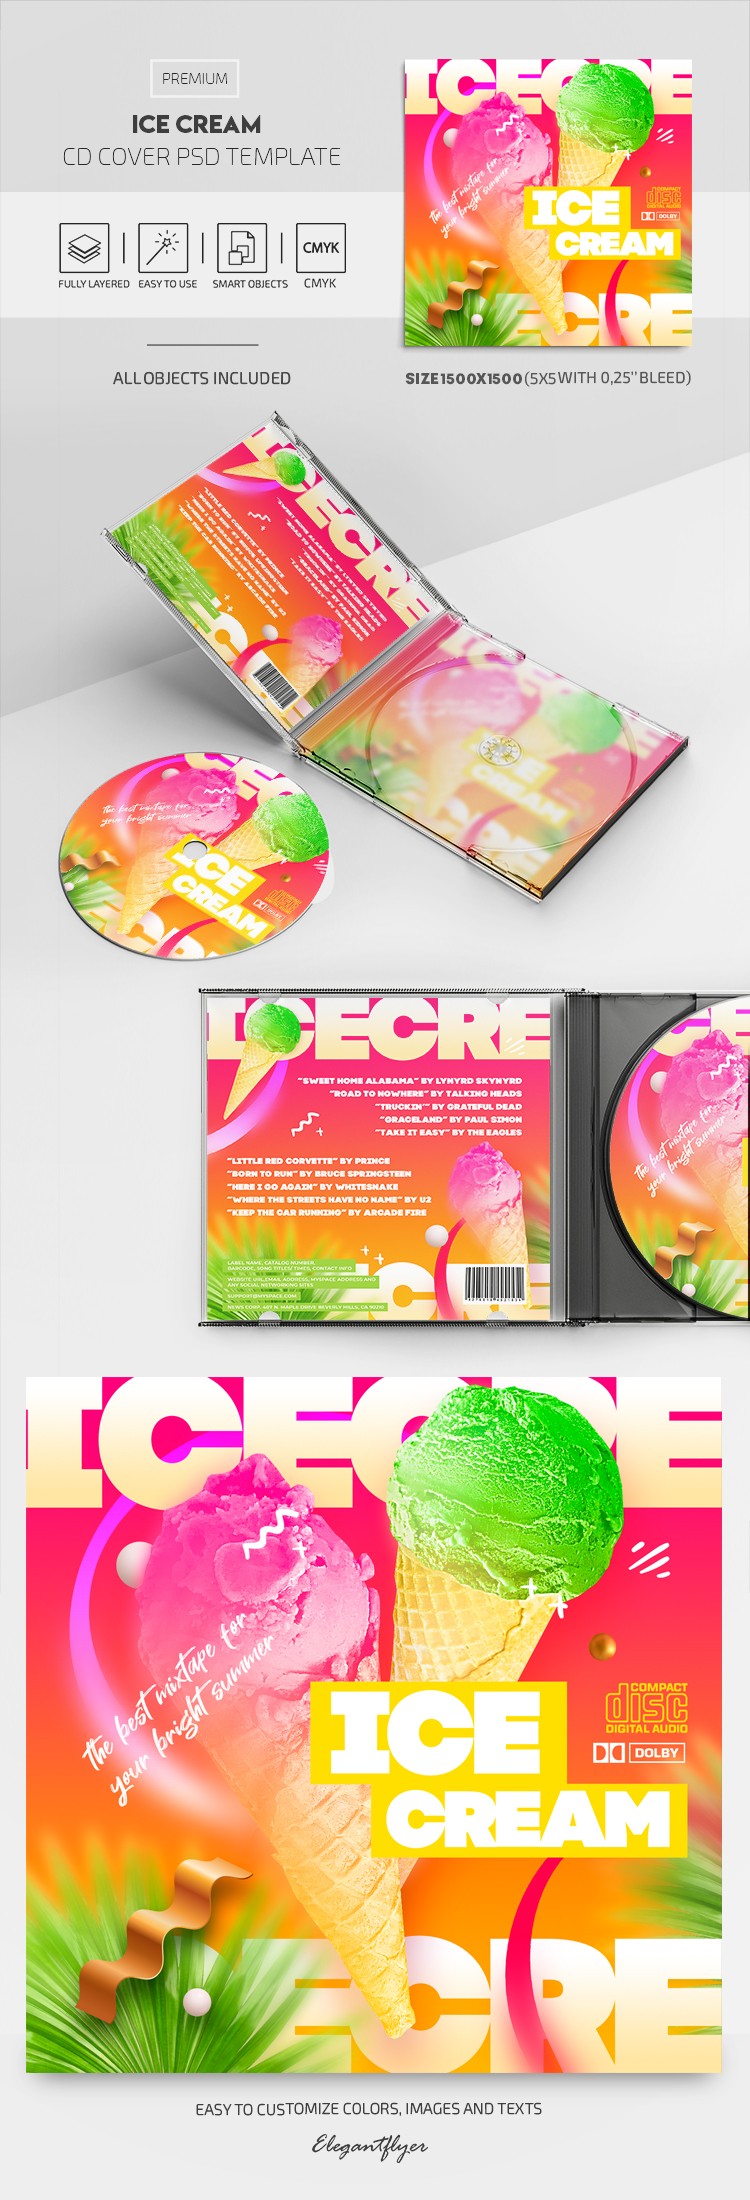 Ice Cream CD Cover by ElegantFlyer